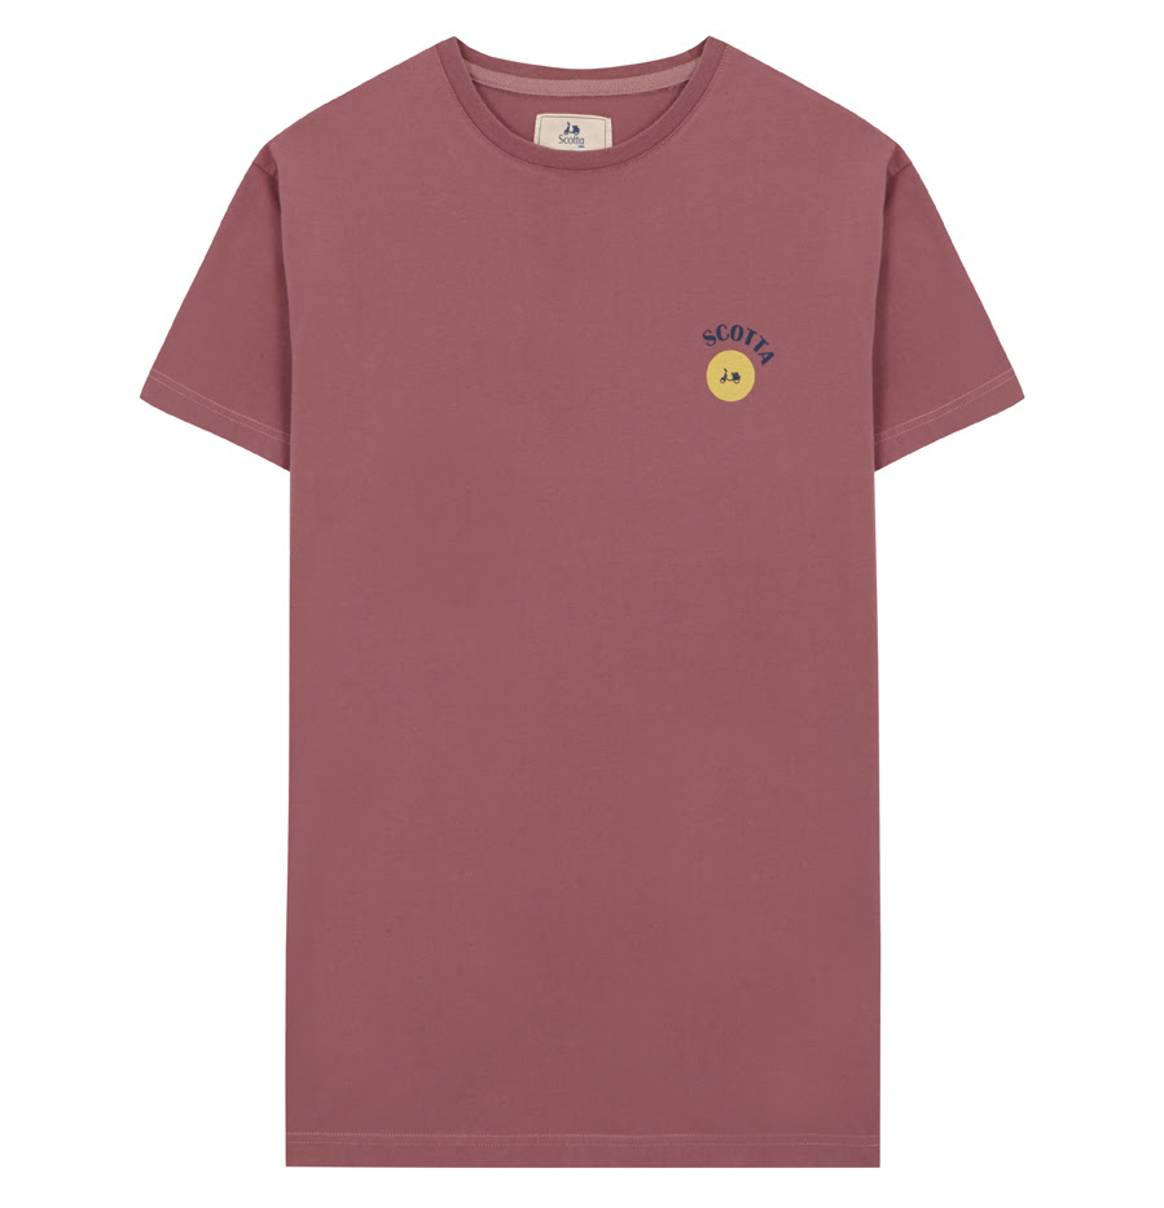 Camiseta Savannah rosa, de Scotta 1985. PVP: 39,90 euros